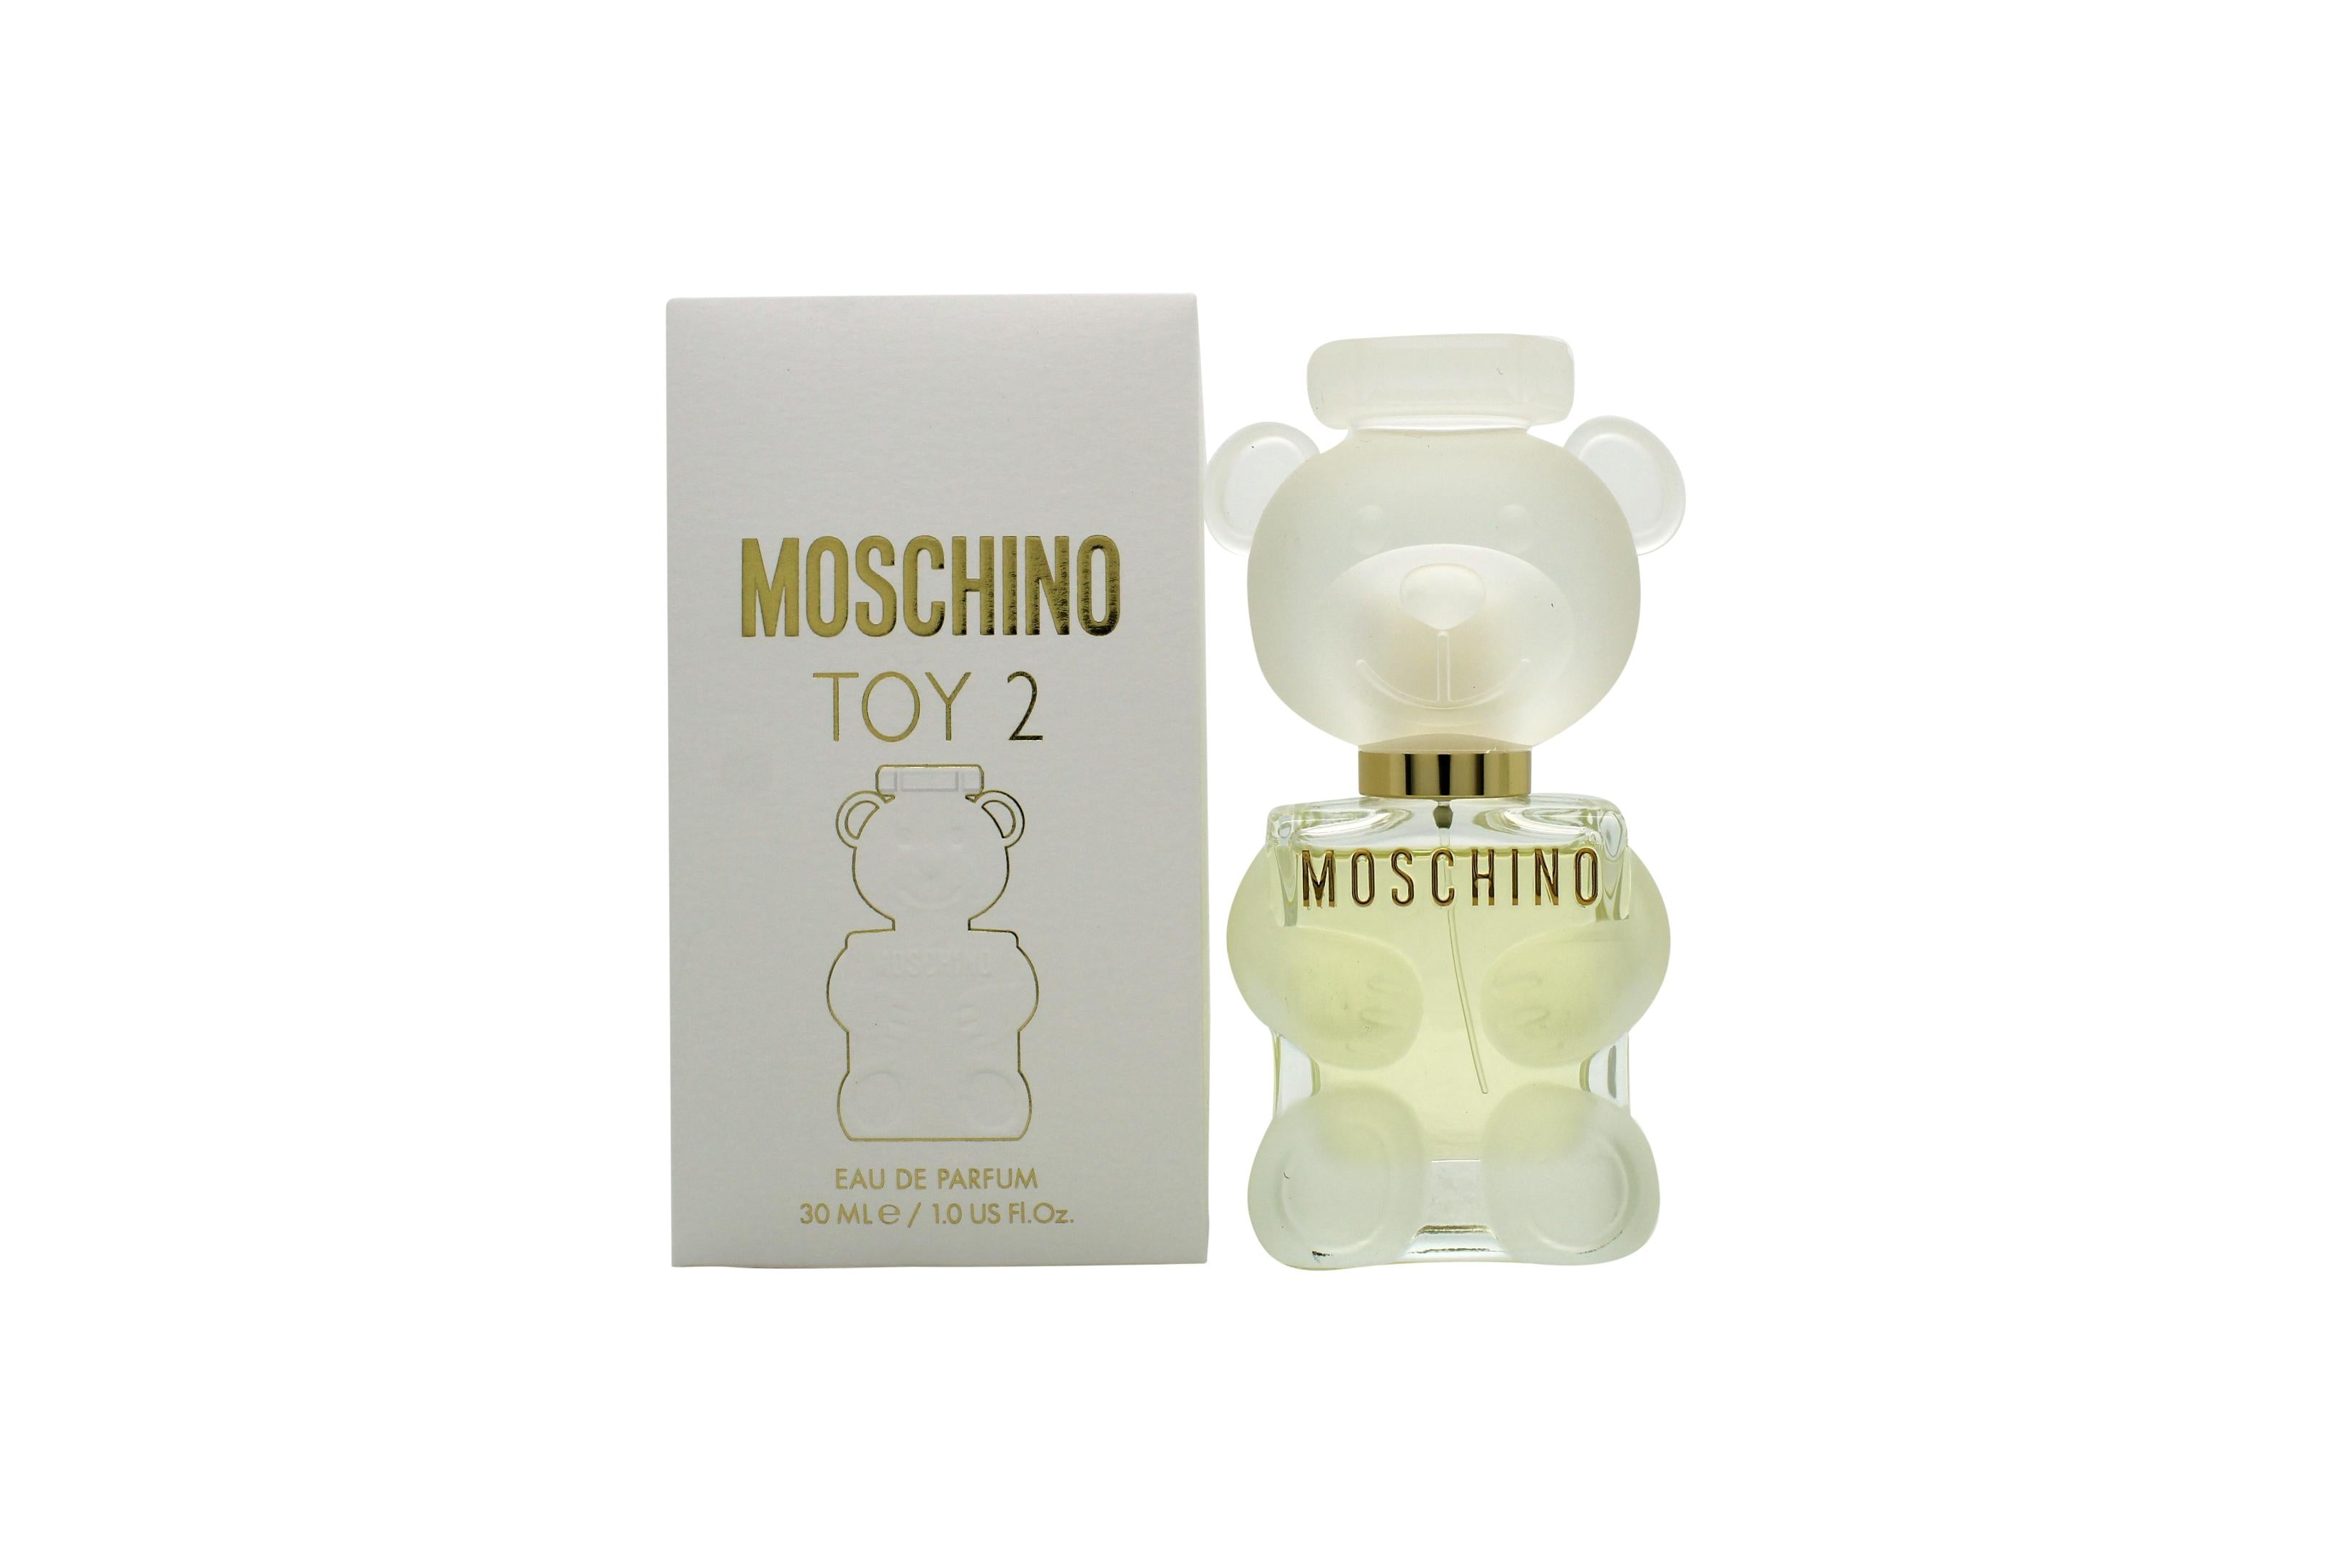 View Moschino Toy 2 Eau de Parfum 30ml Spray information